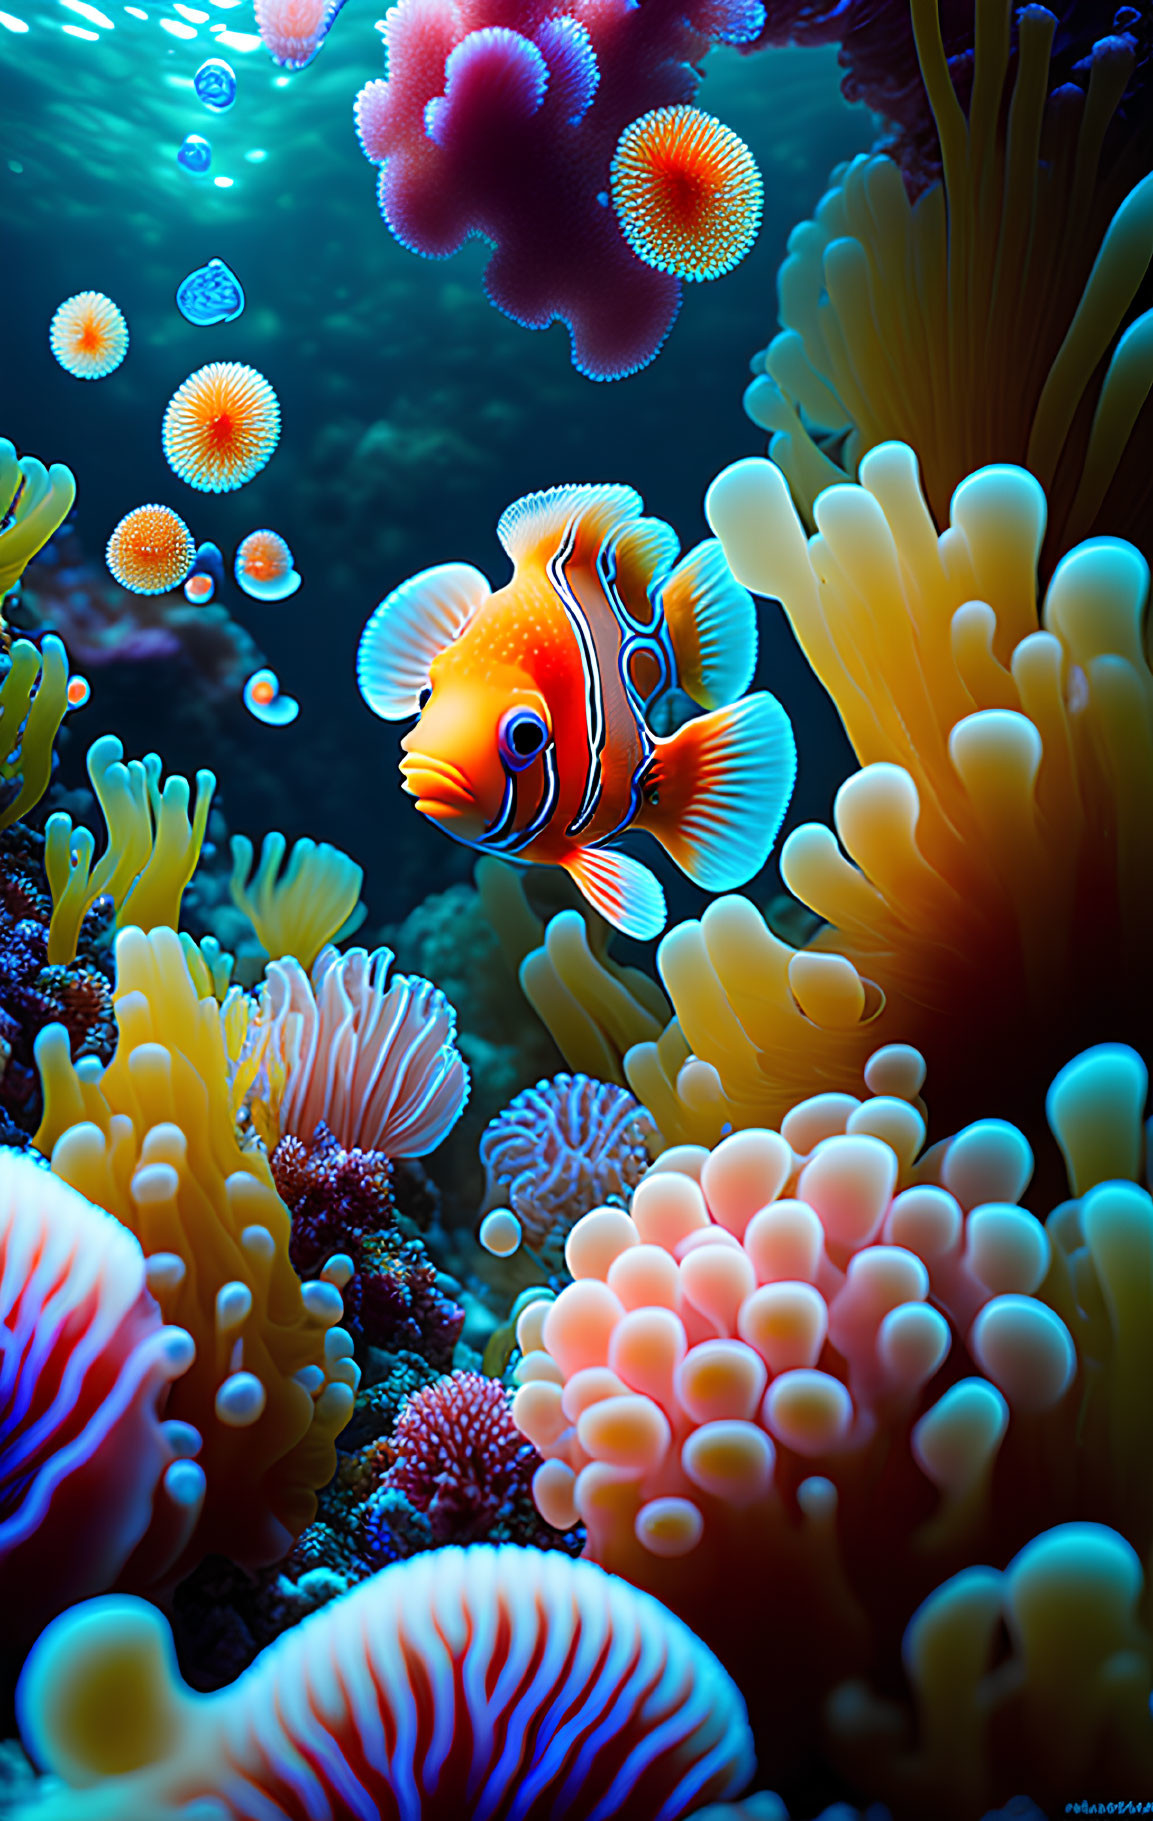 Colorful Clownfish in Vibrant Underwater Scene